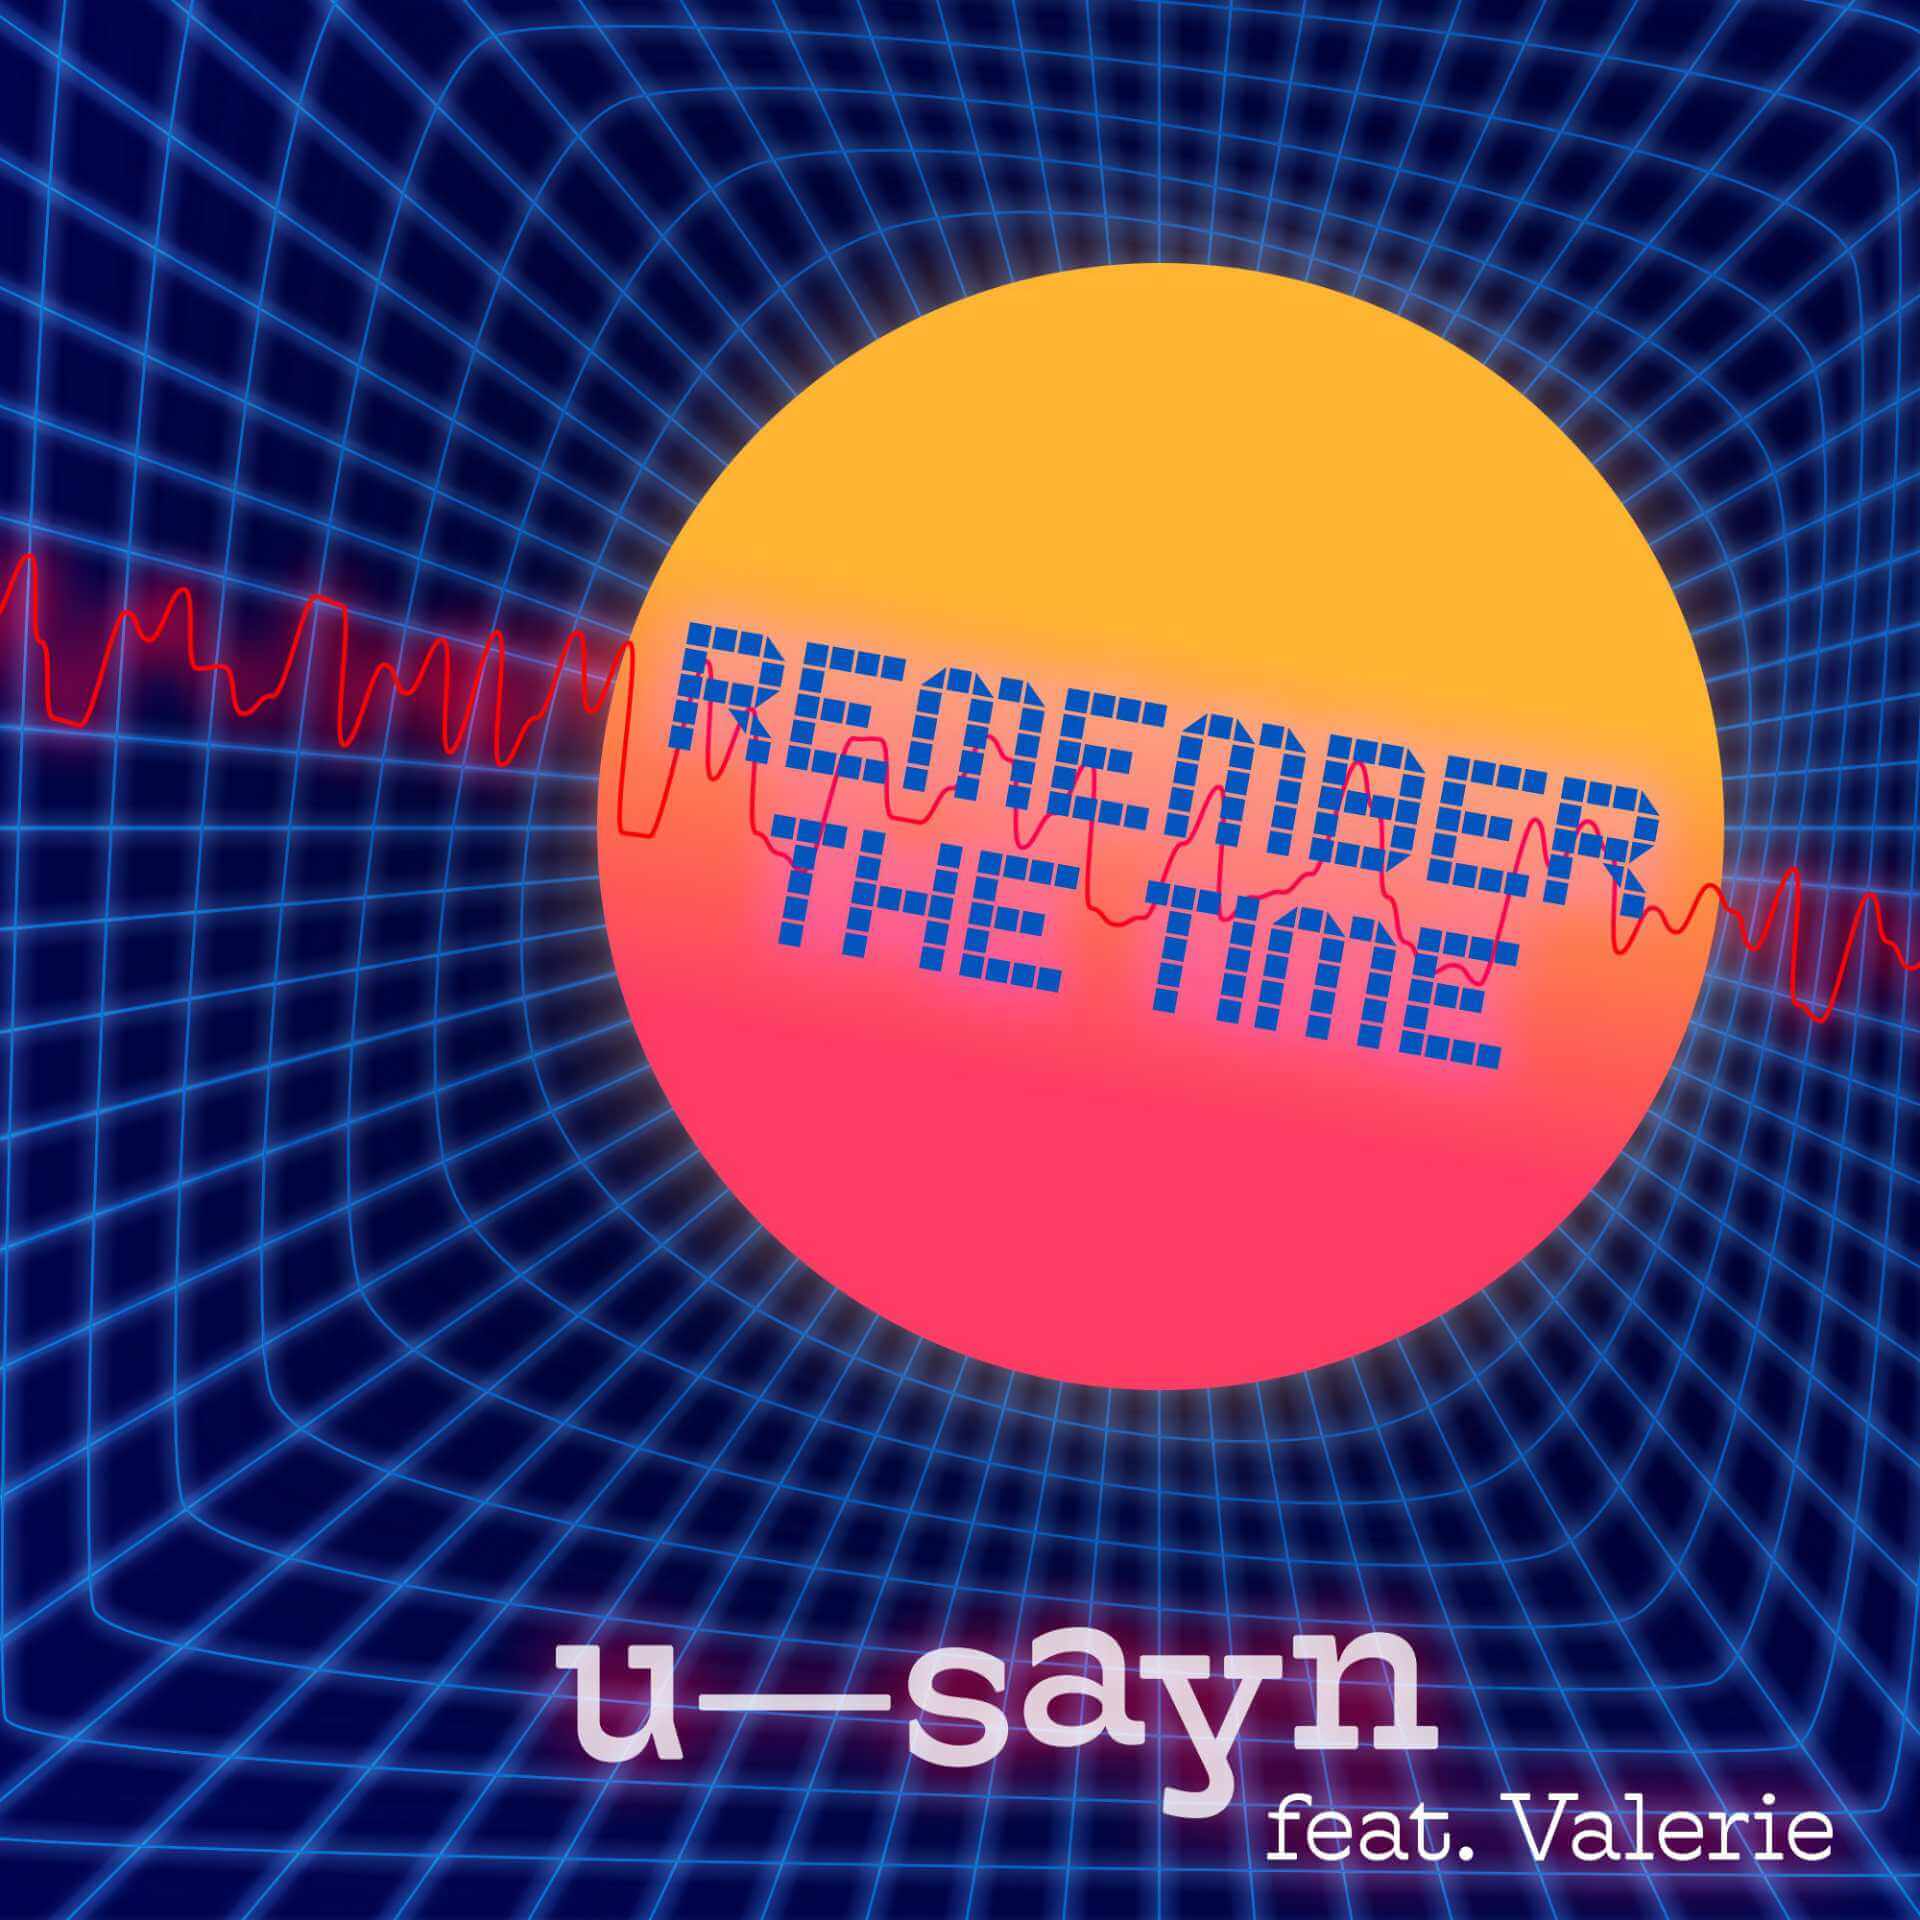 u sayn remember the time